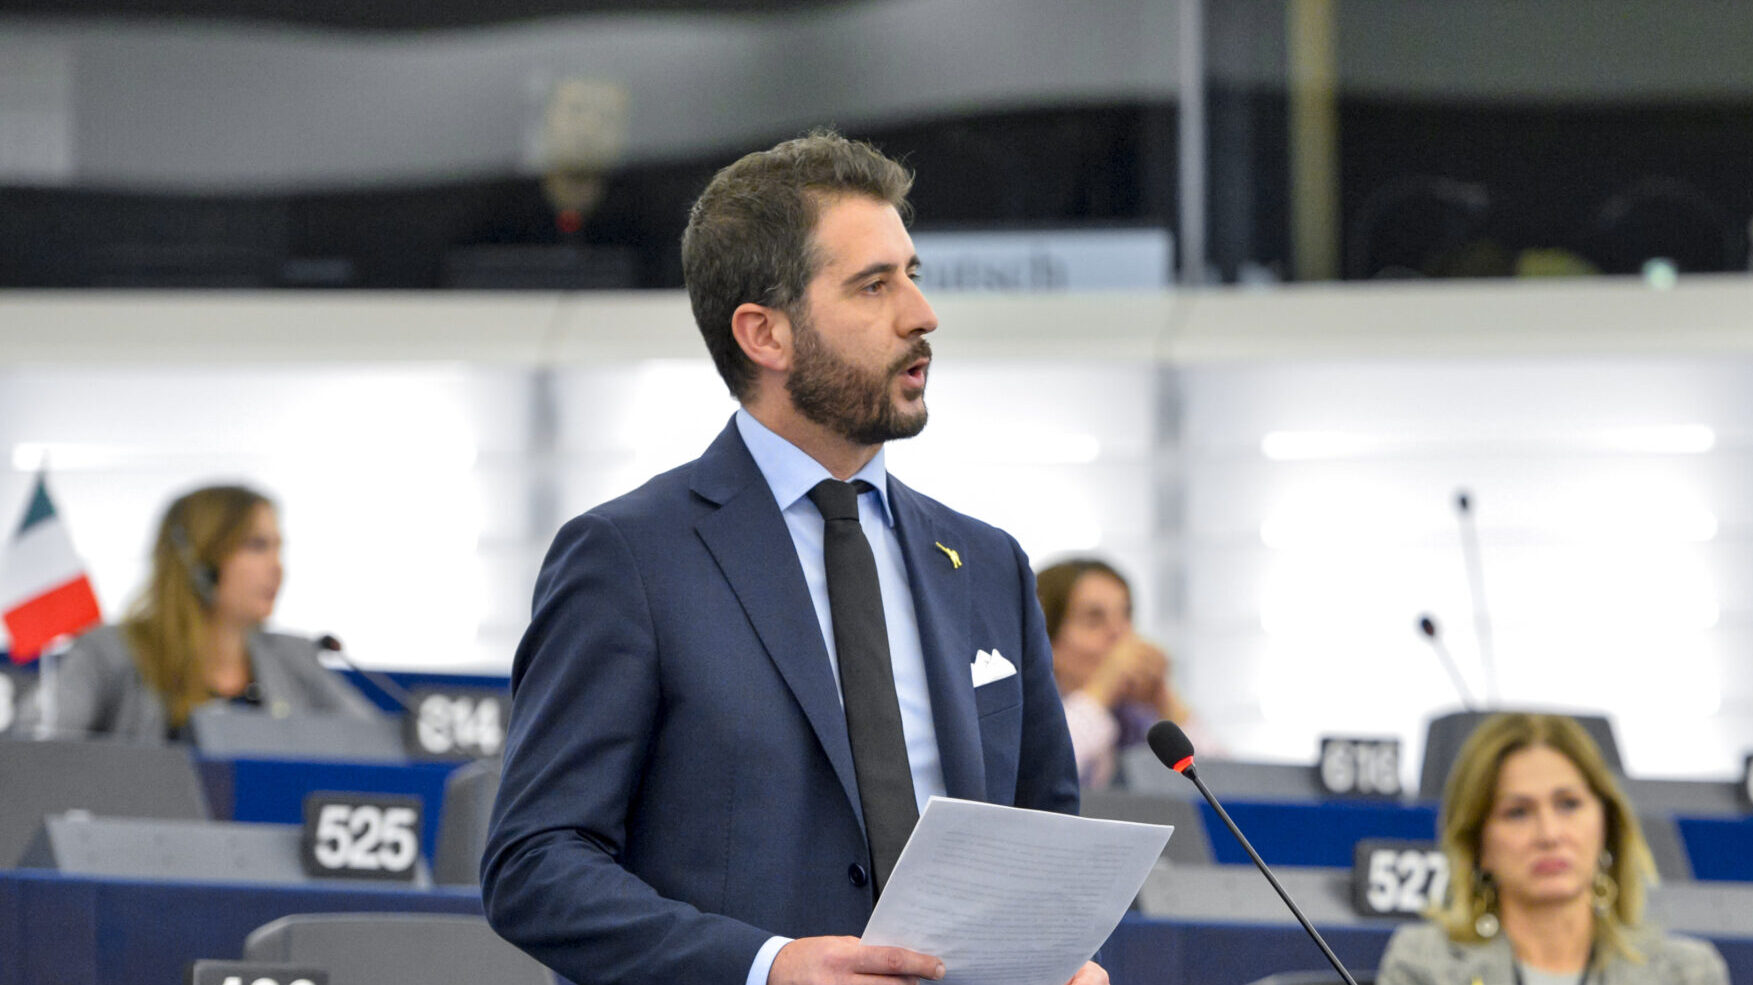 Paolo BORCHIA in the EP in Strasbourg